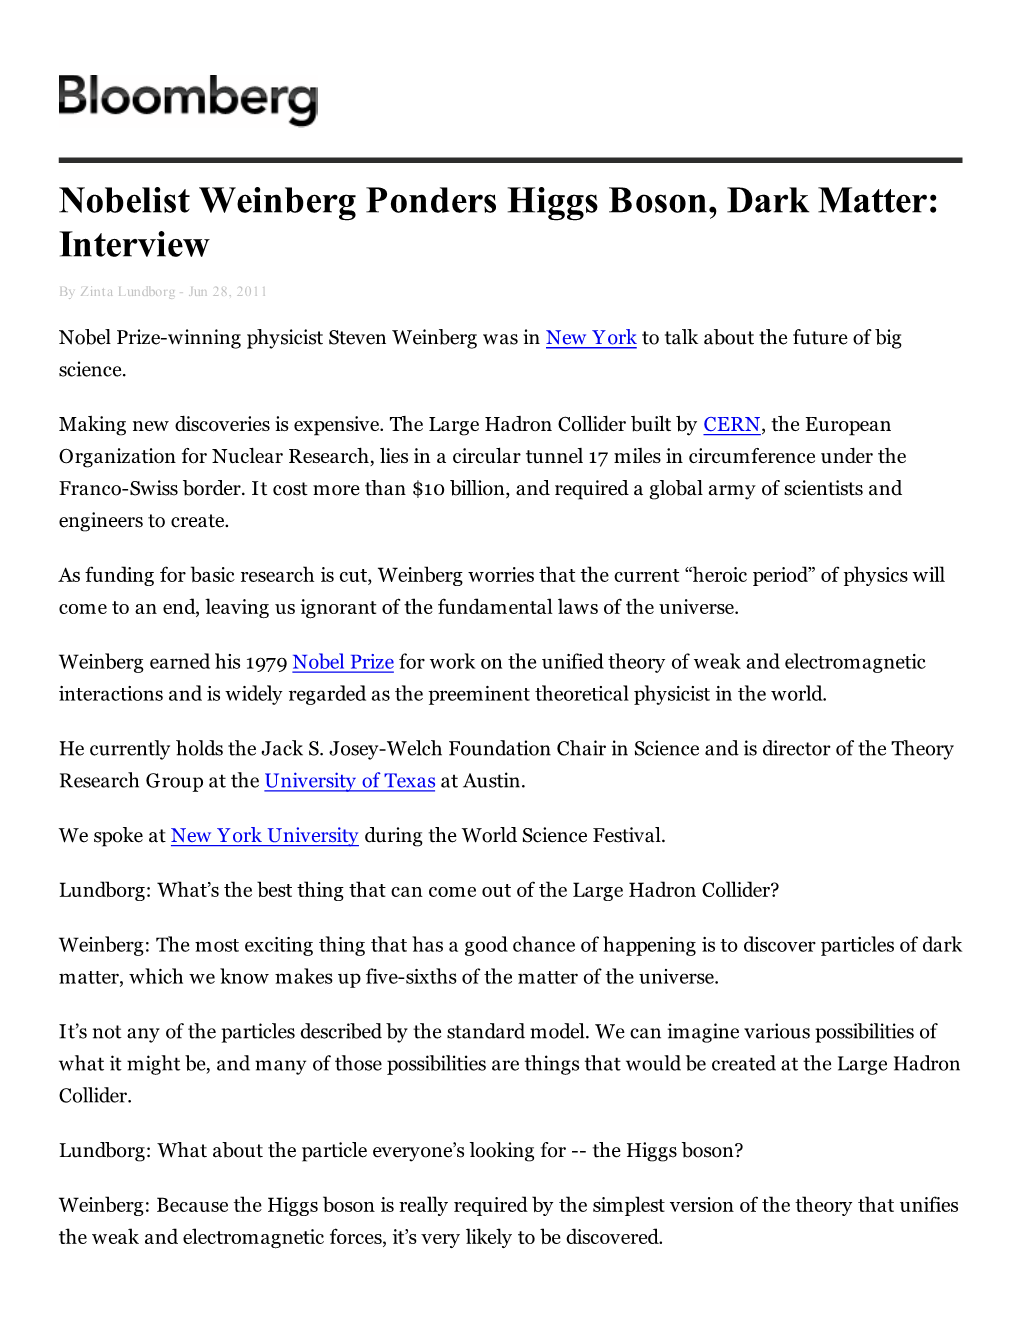 Nobelist Weinberg Ponders Higgs Boson, Dark Matter: Interview